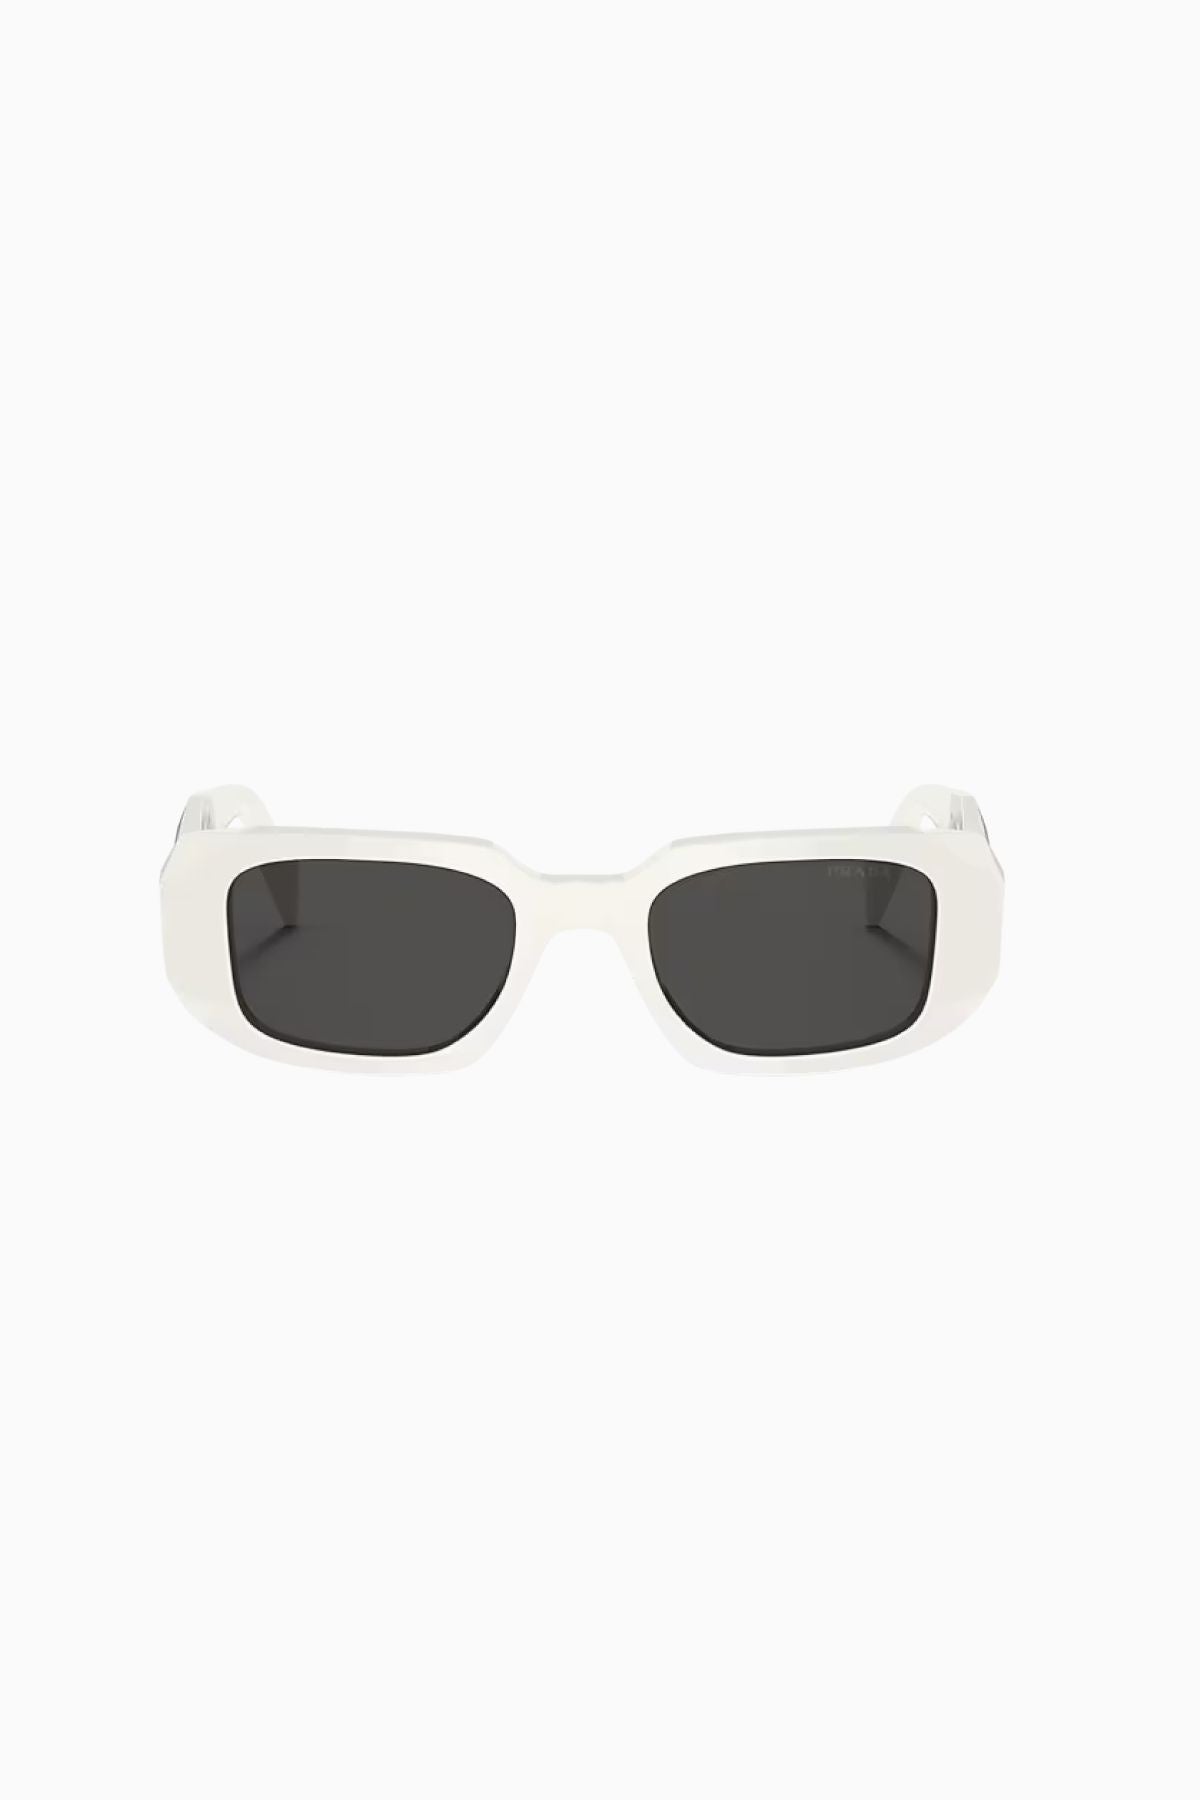 Prada Iconic Rectangle Sunglasses - Talc/ Dark Grey